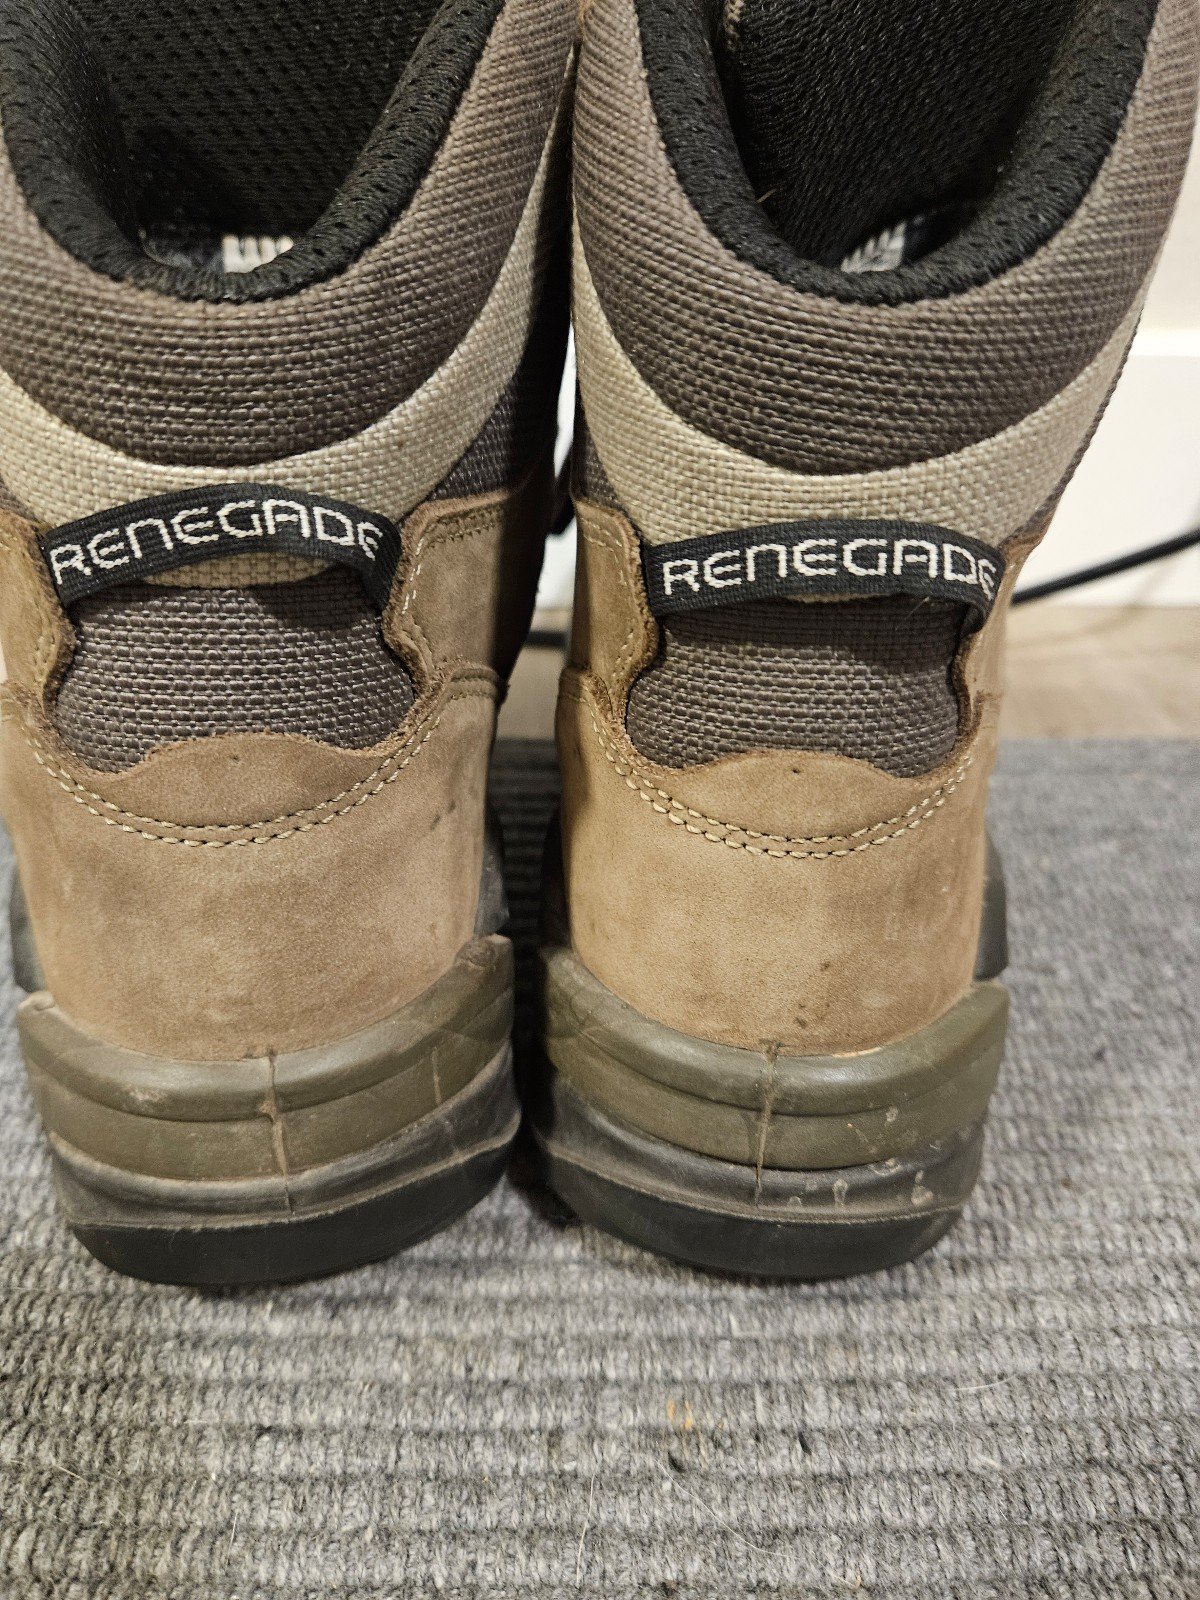 Lowa RenegadesRenegade GTX Mid Hiking Boots - Wide eu8EbrBgP